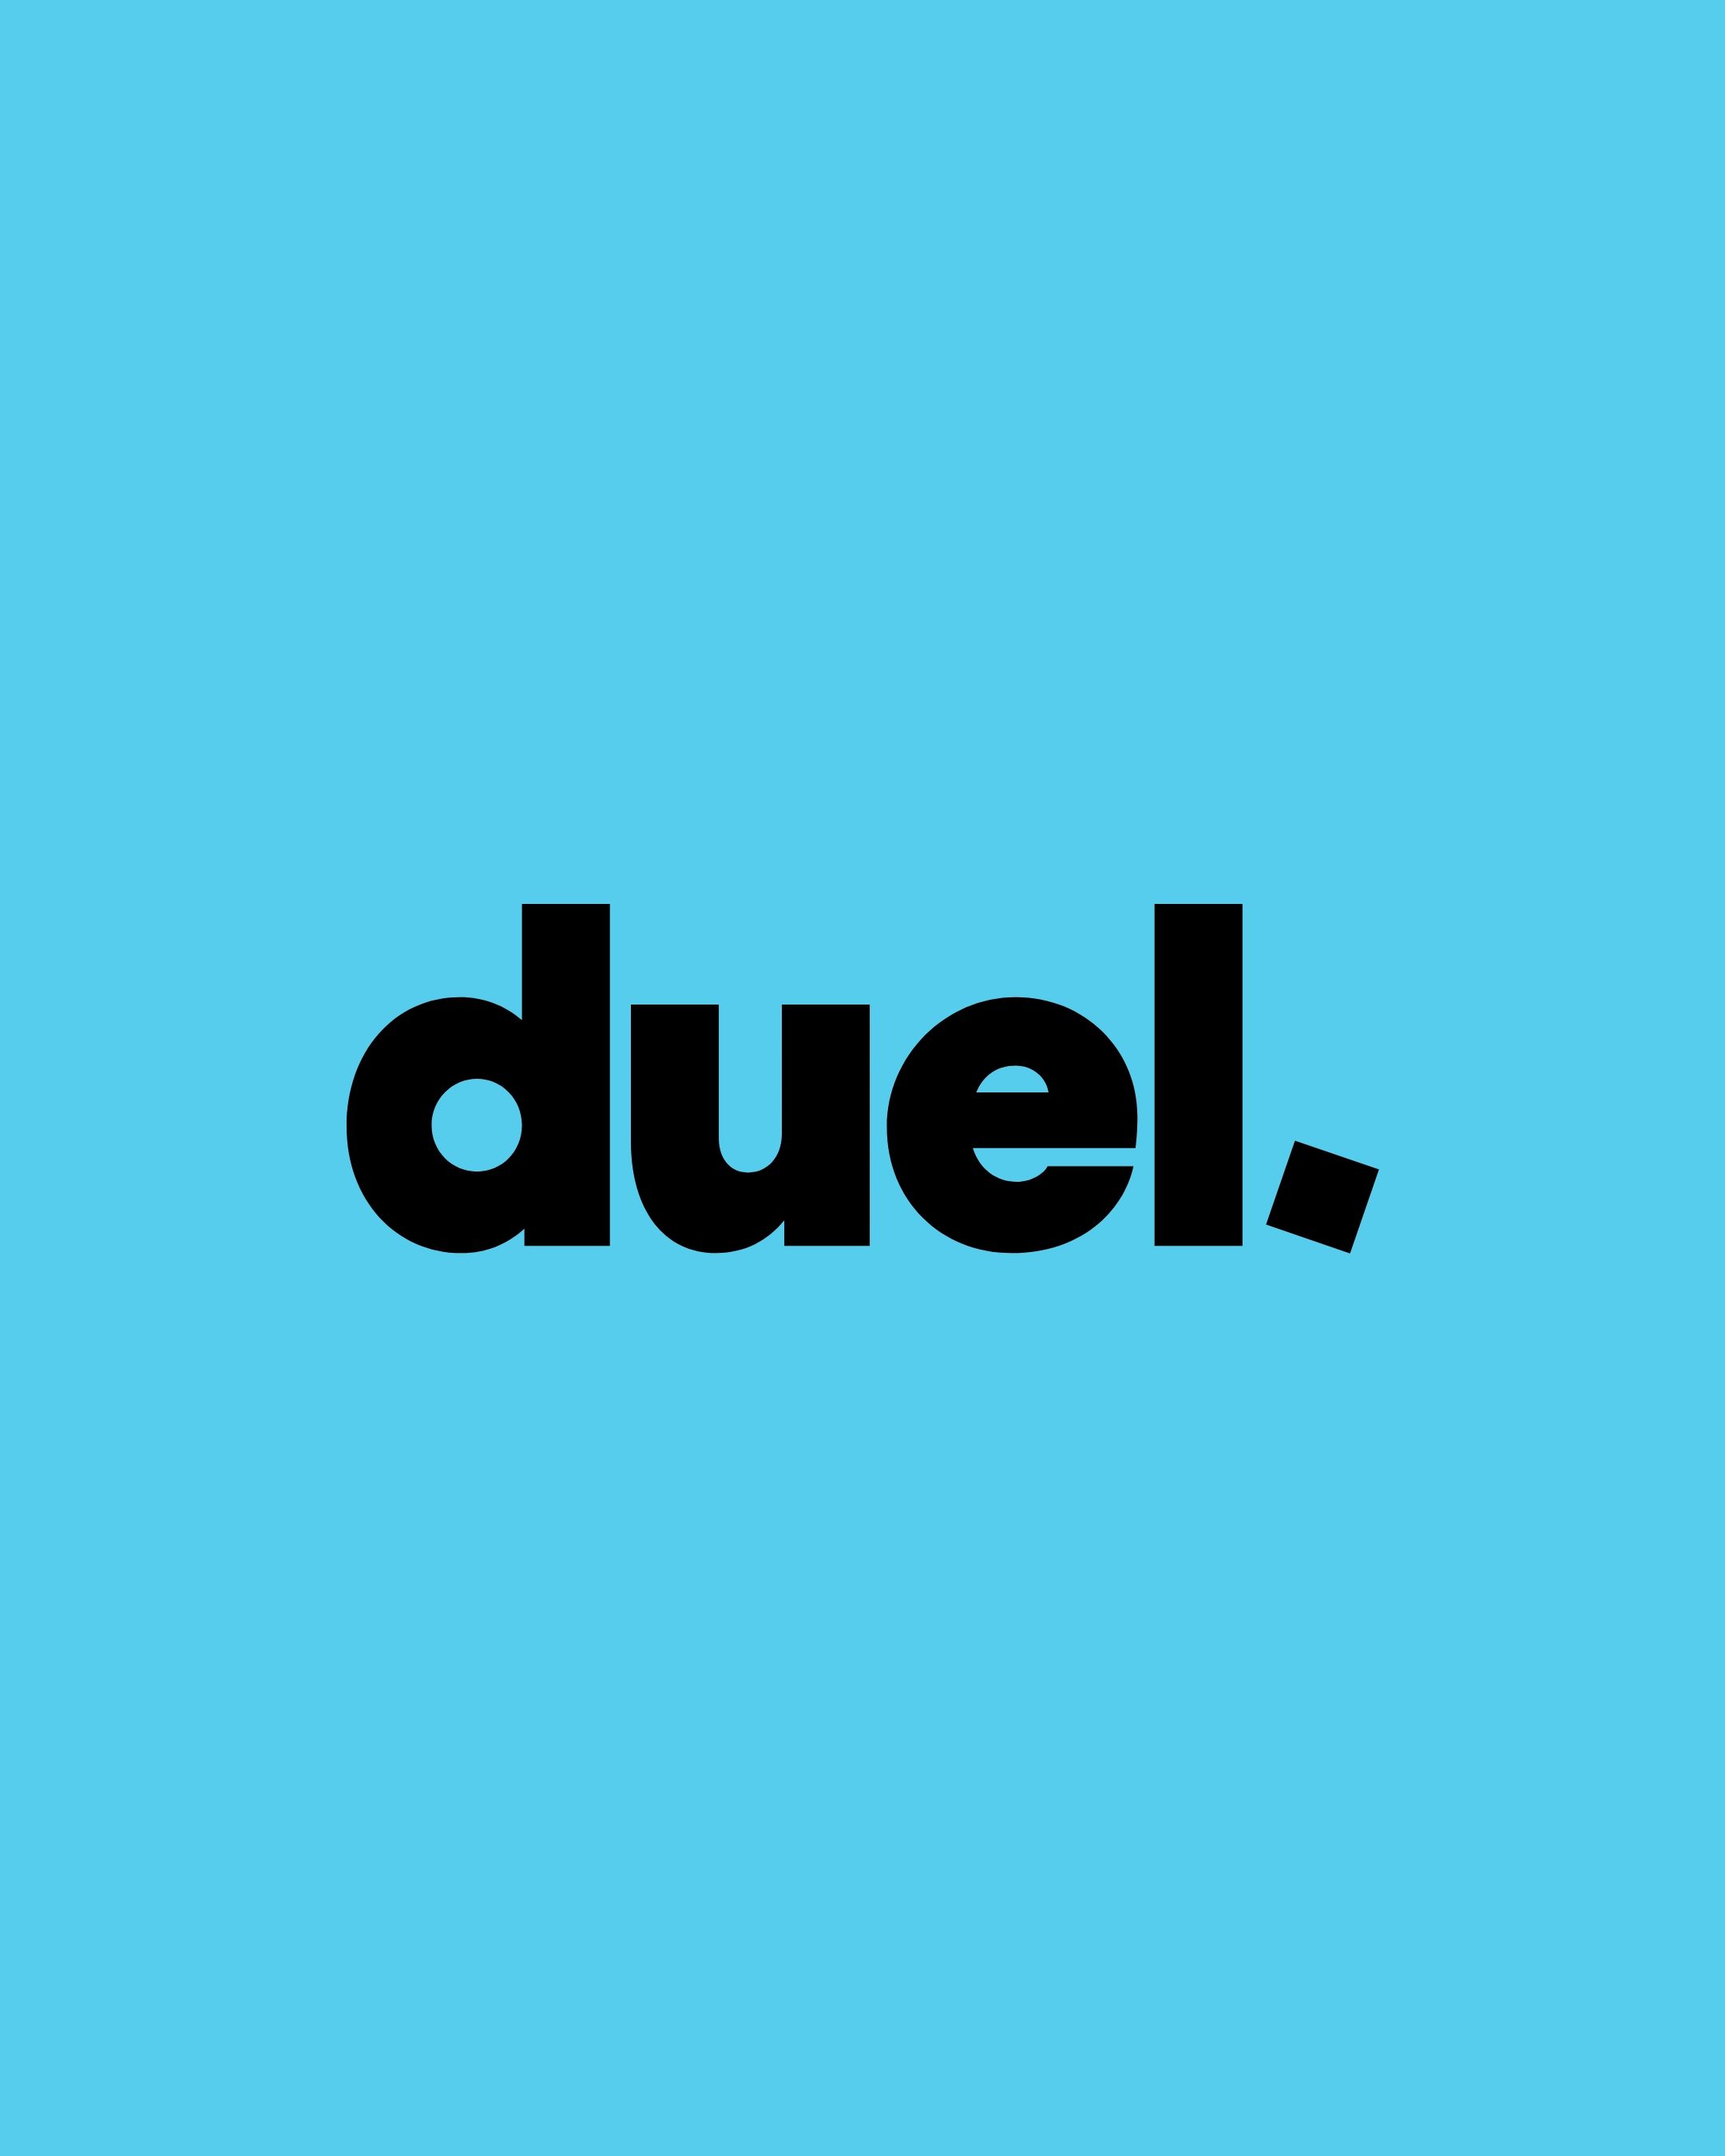 Duel logotype